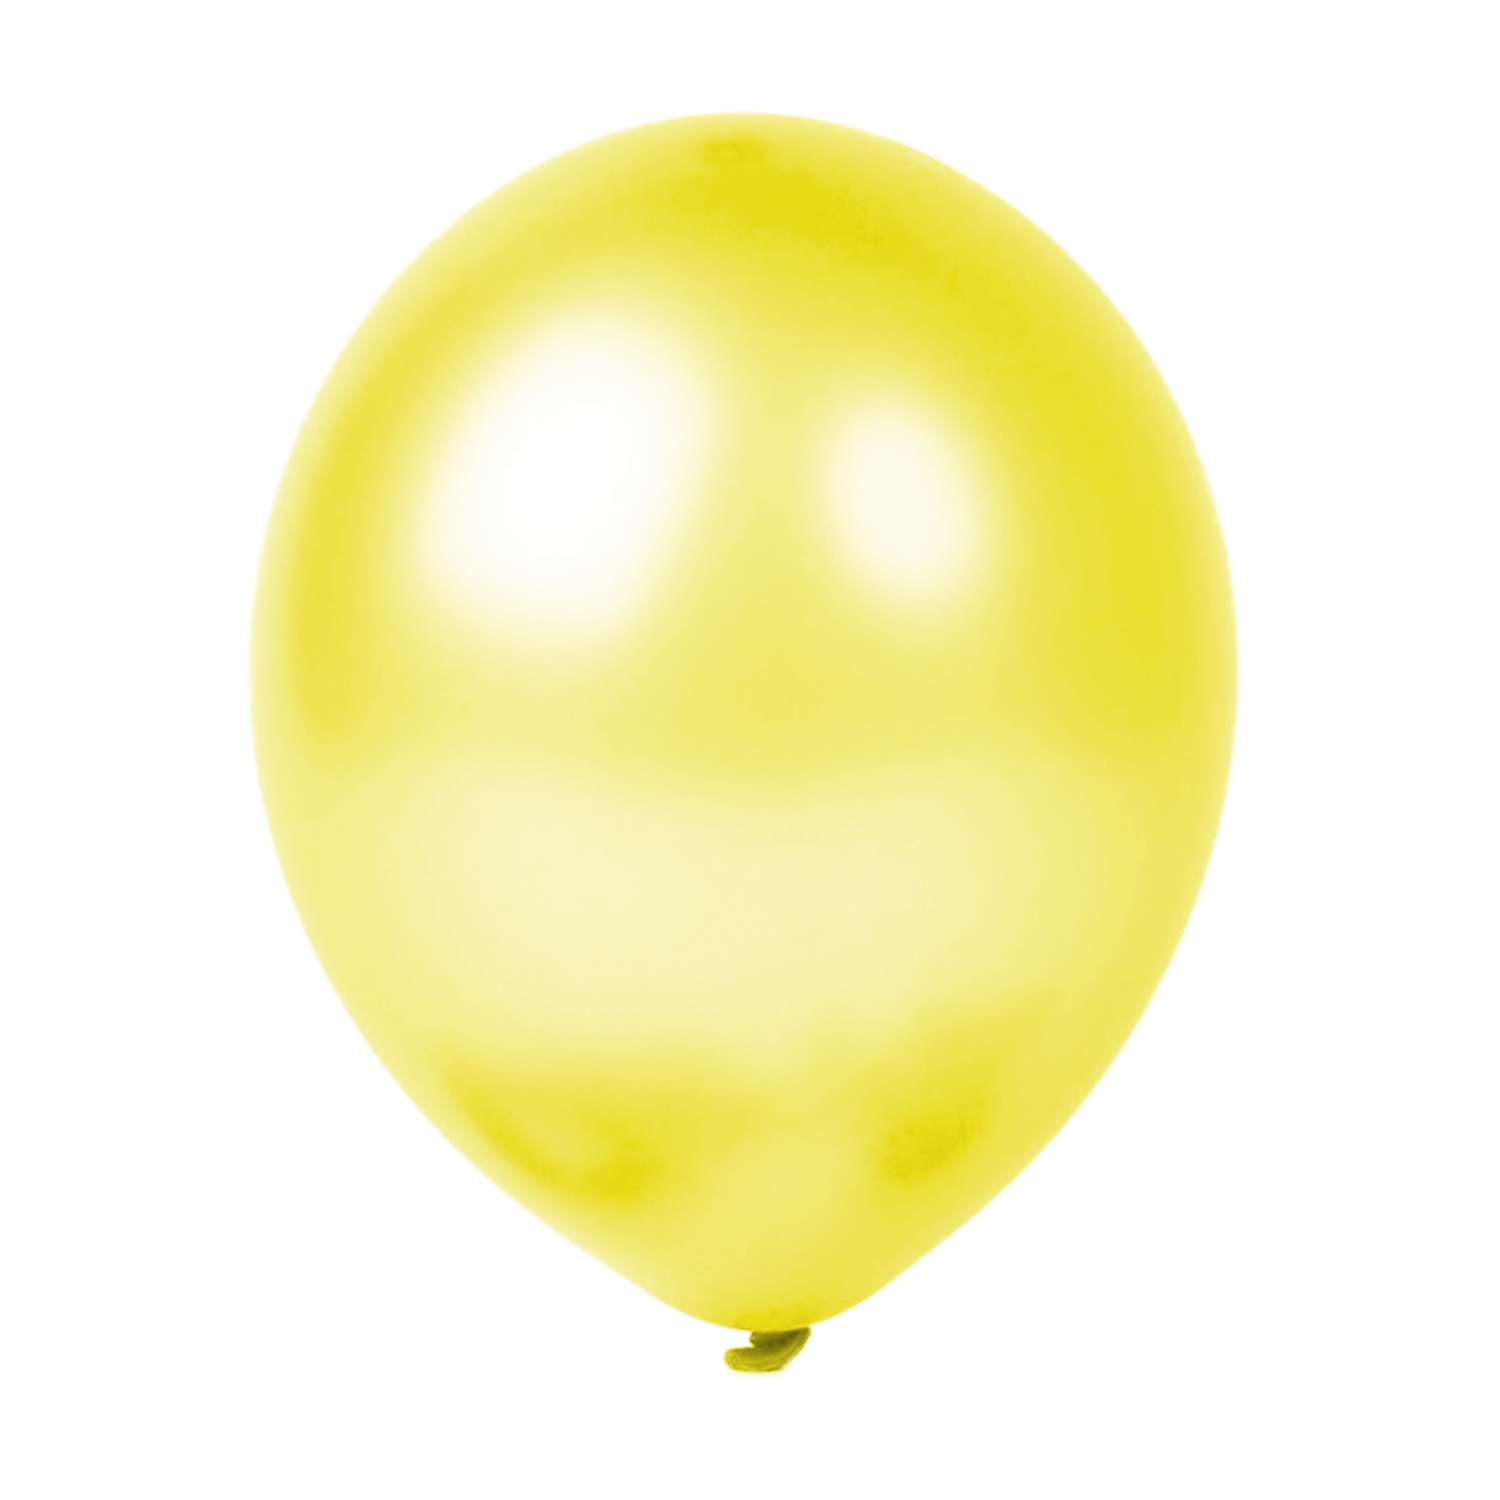 100er SET - Latex Luftballon - 12inch - Gelb - Metallic (glänzend)